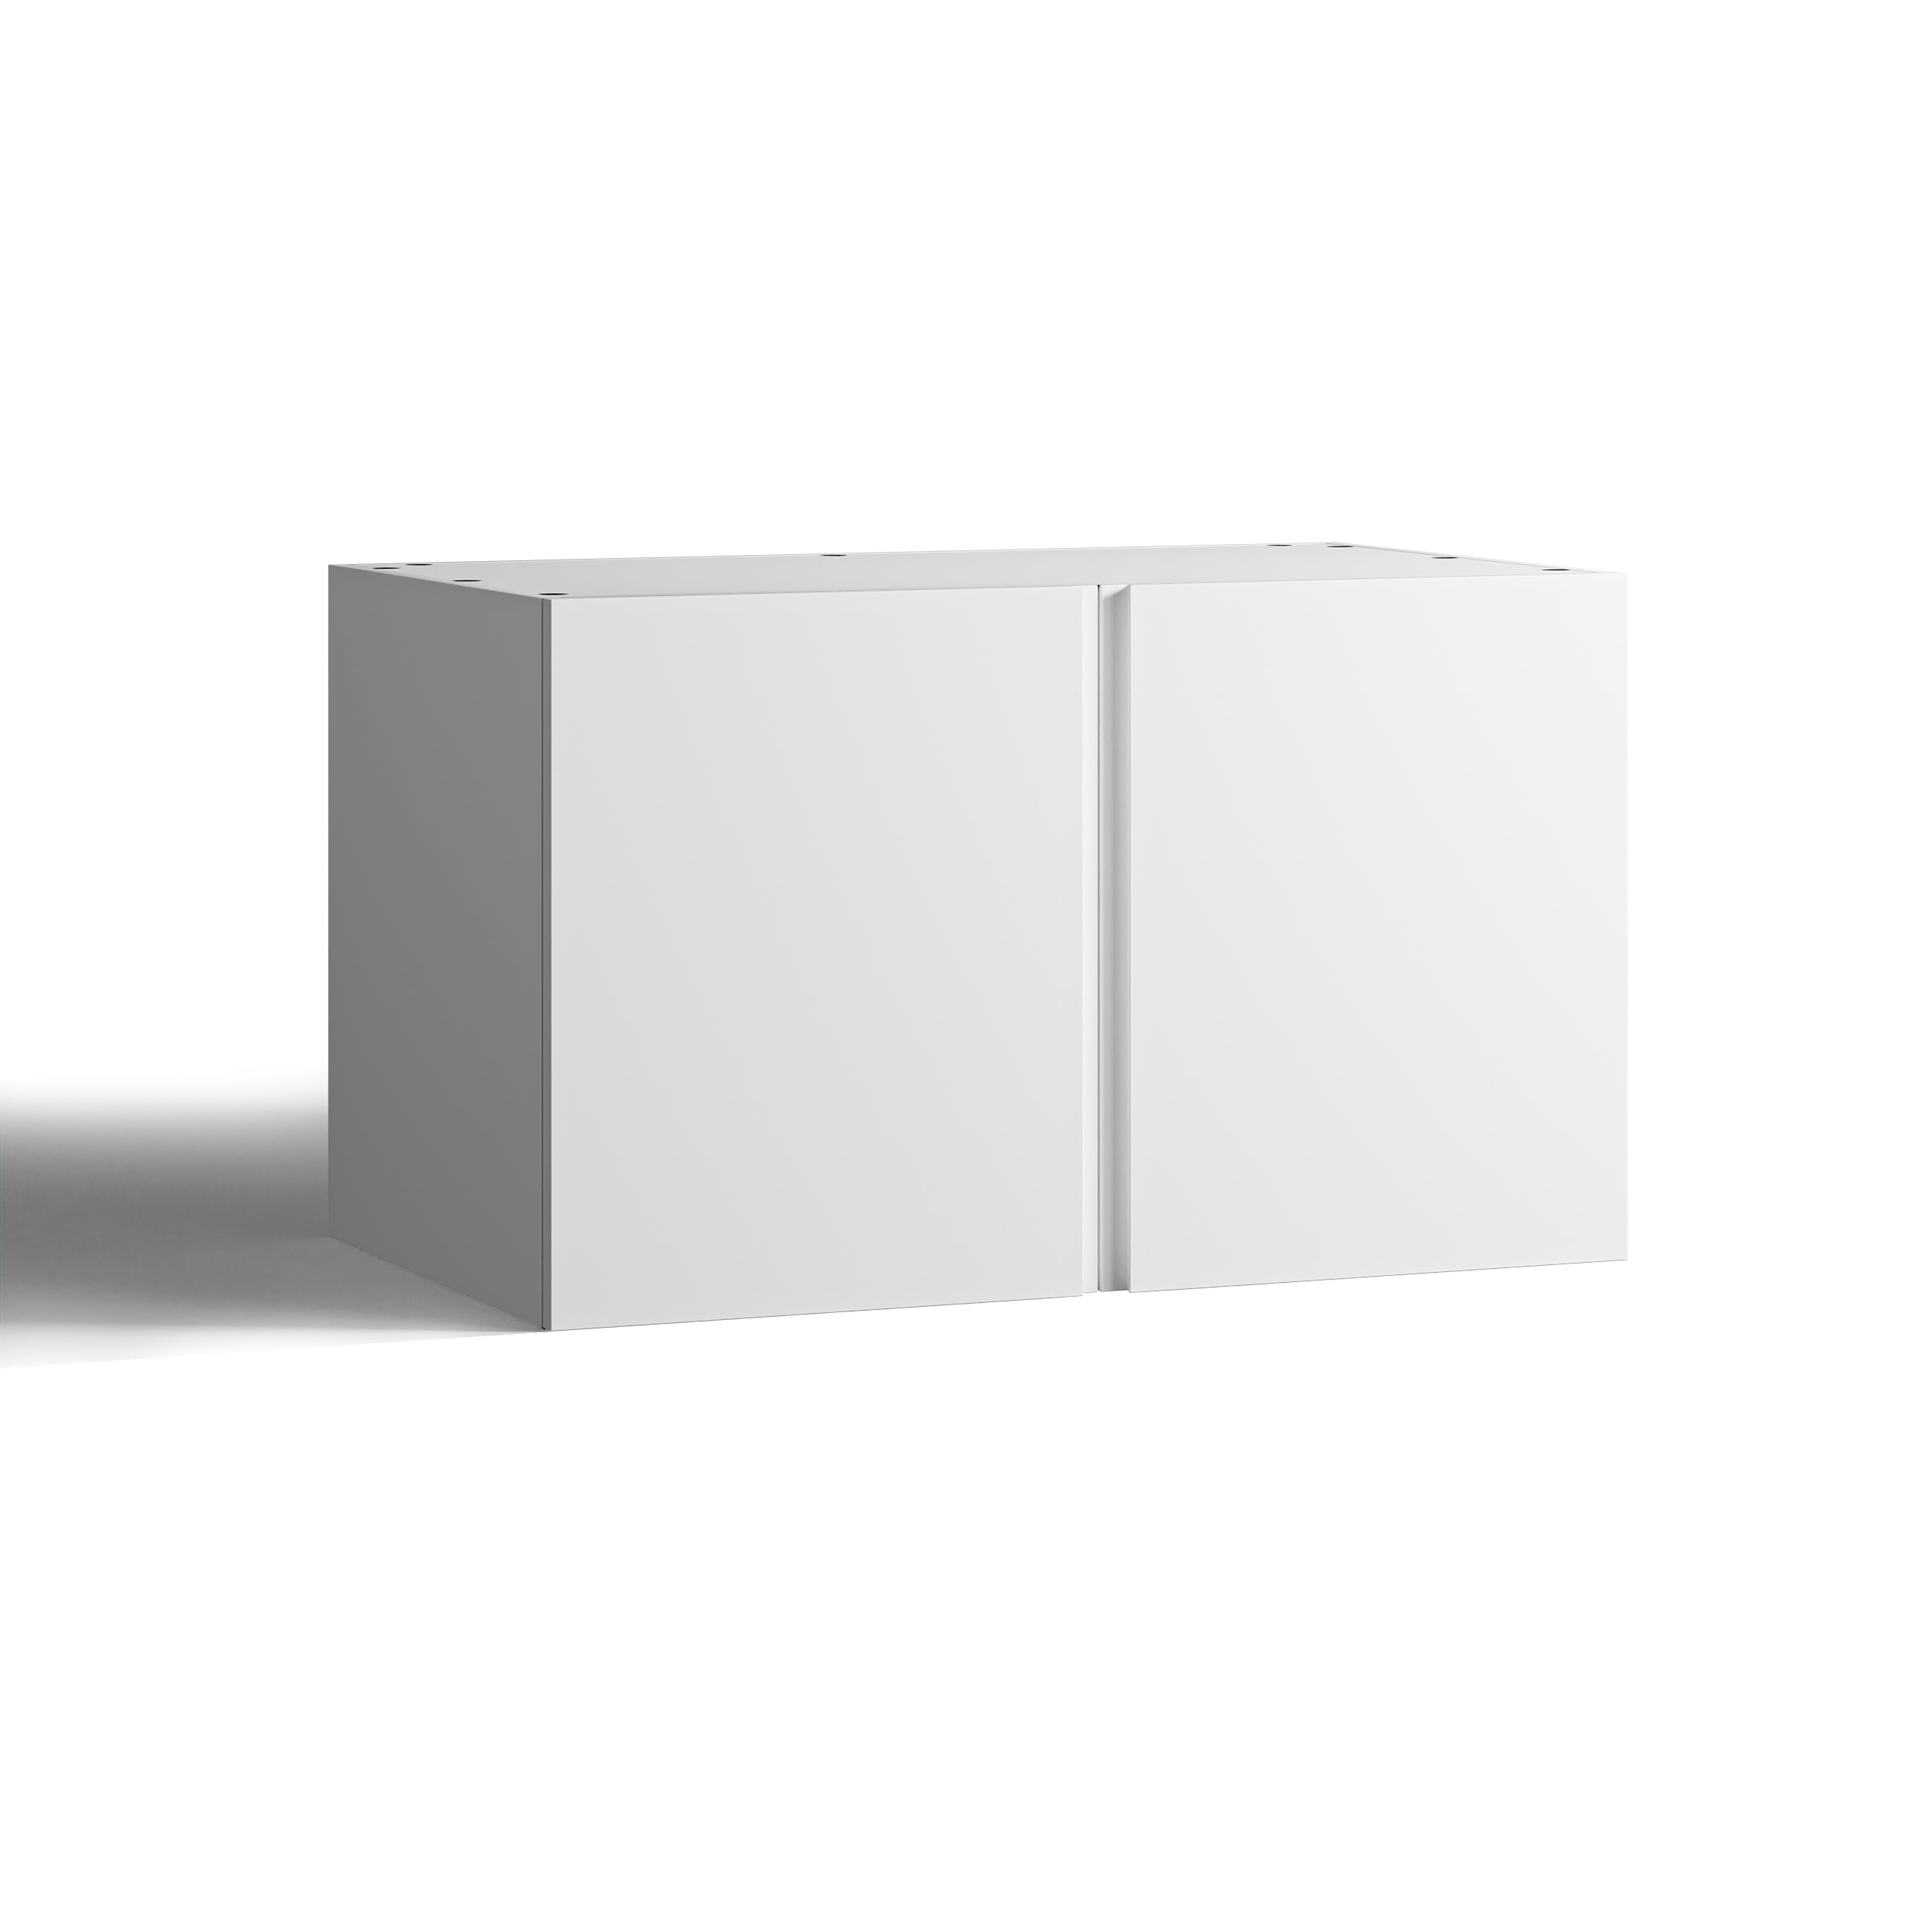 100x60 - Cabinet (58cm D) w 2 Doors - Finger Pull - RAW - PAX